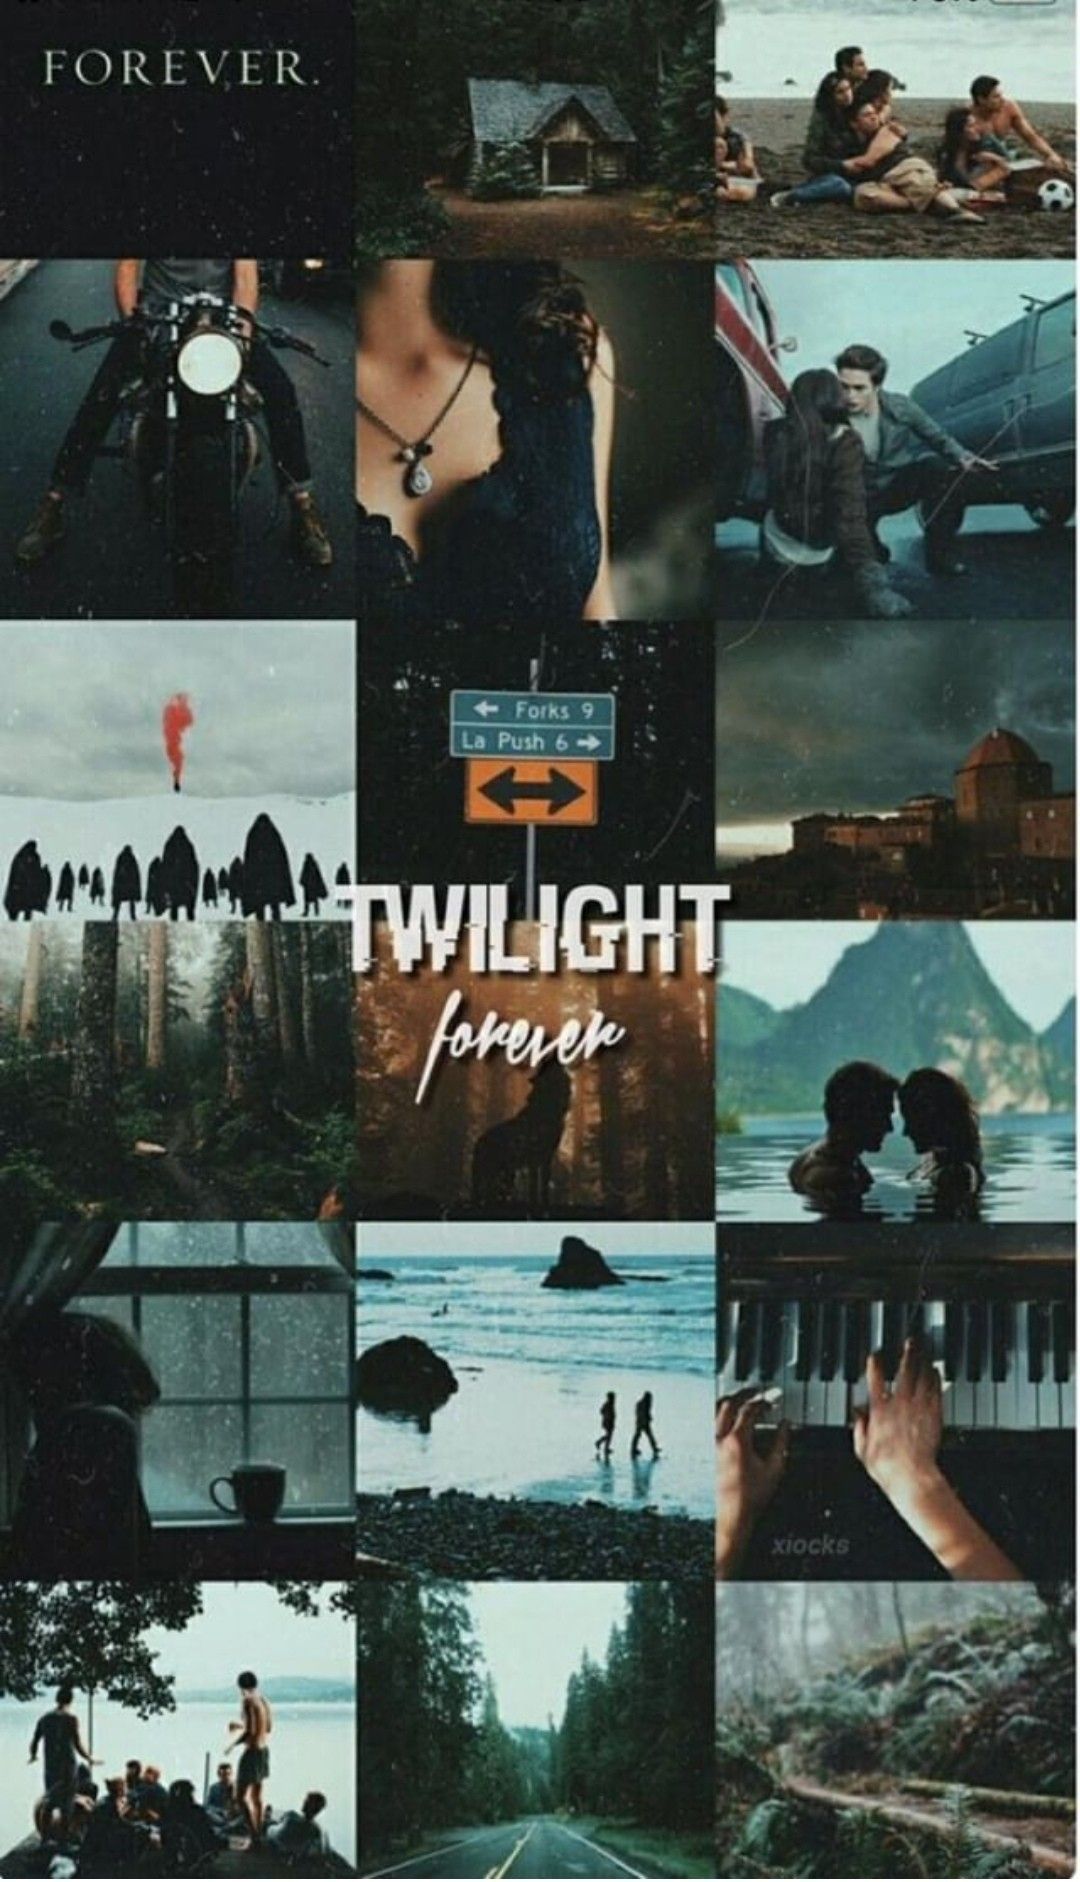 Twilight background aesthetic. Twilight saga